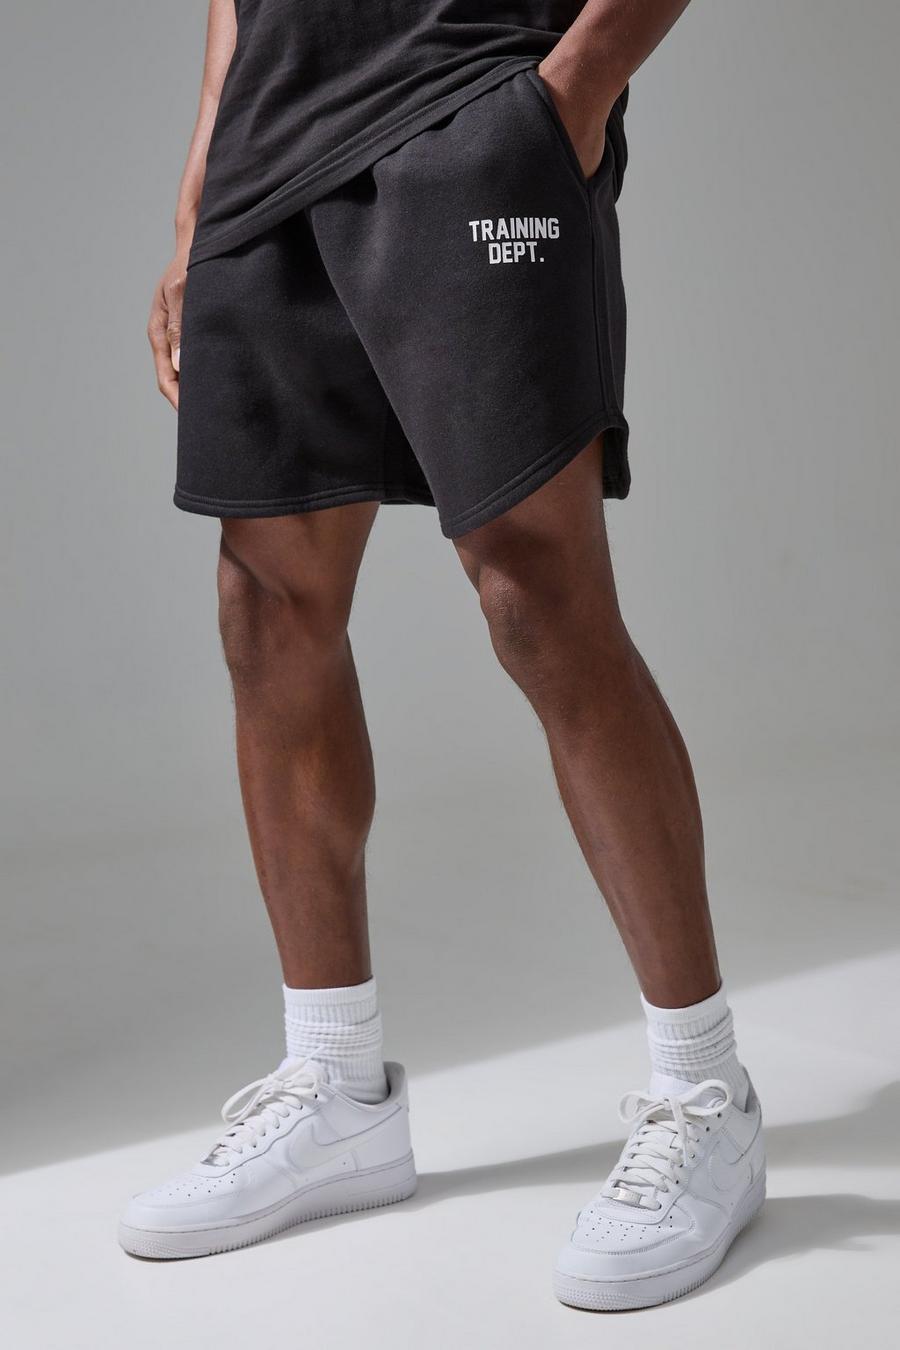 Man Active Training Dept Jersey-Shorts, Black